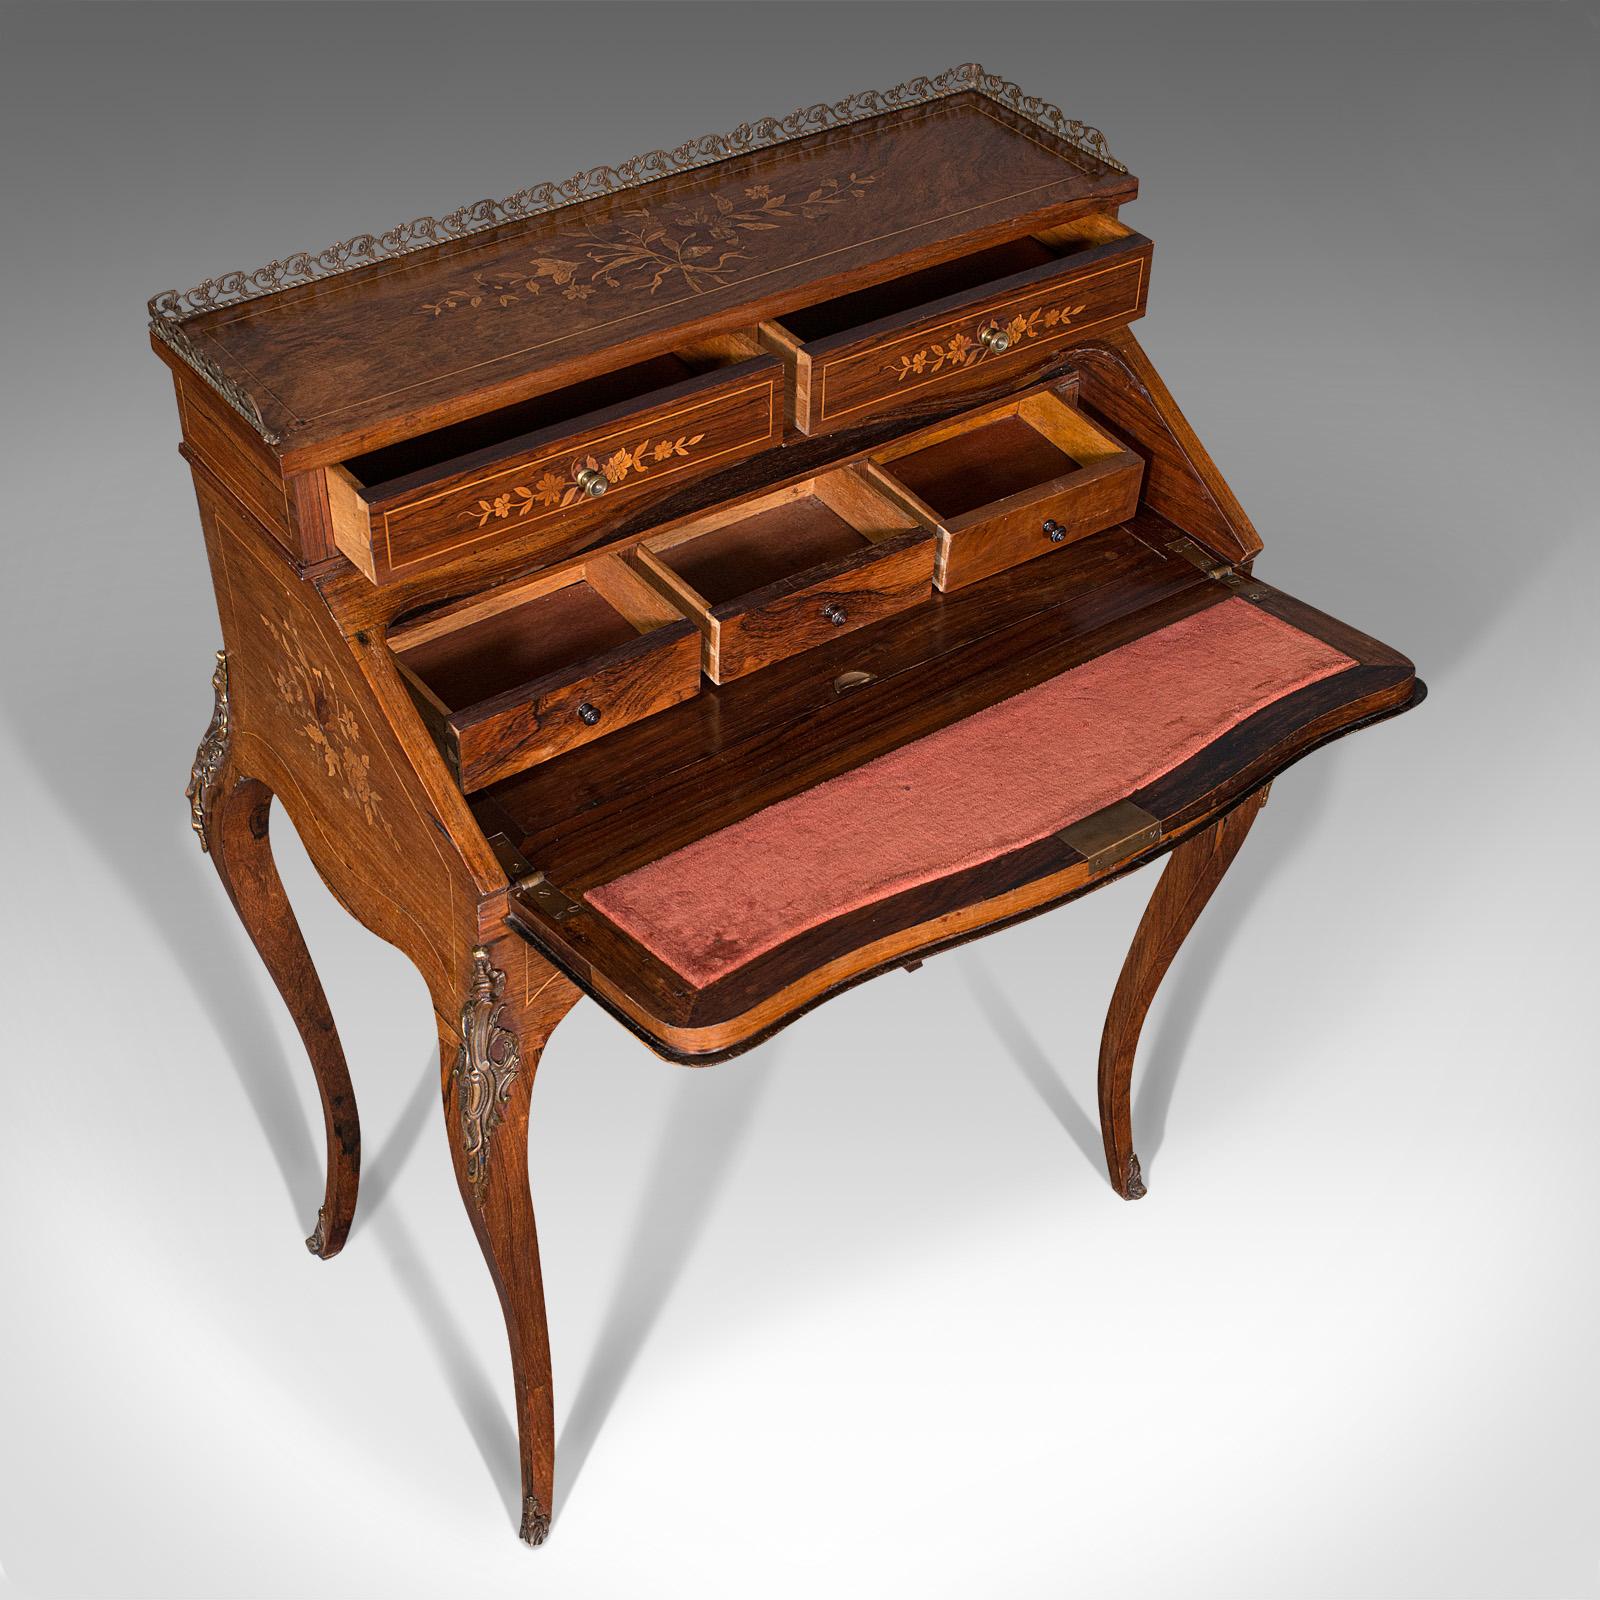 Antique Bureau De Dame, French, Walnut, Compact, Writing Desk, Victorian, C.1880 4